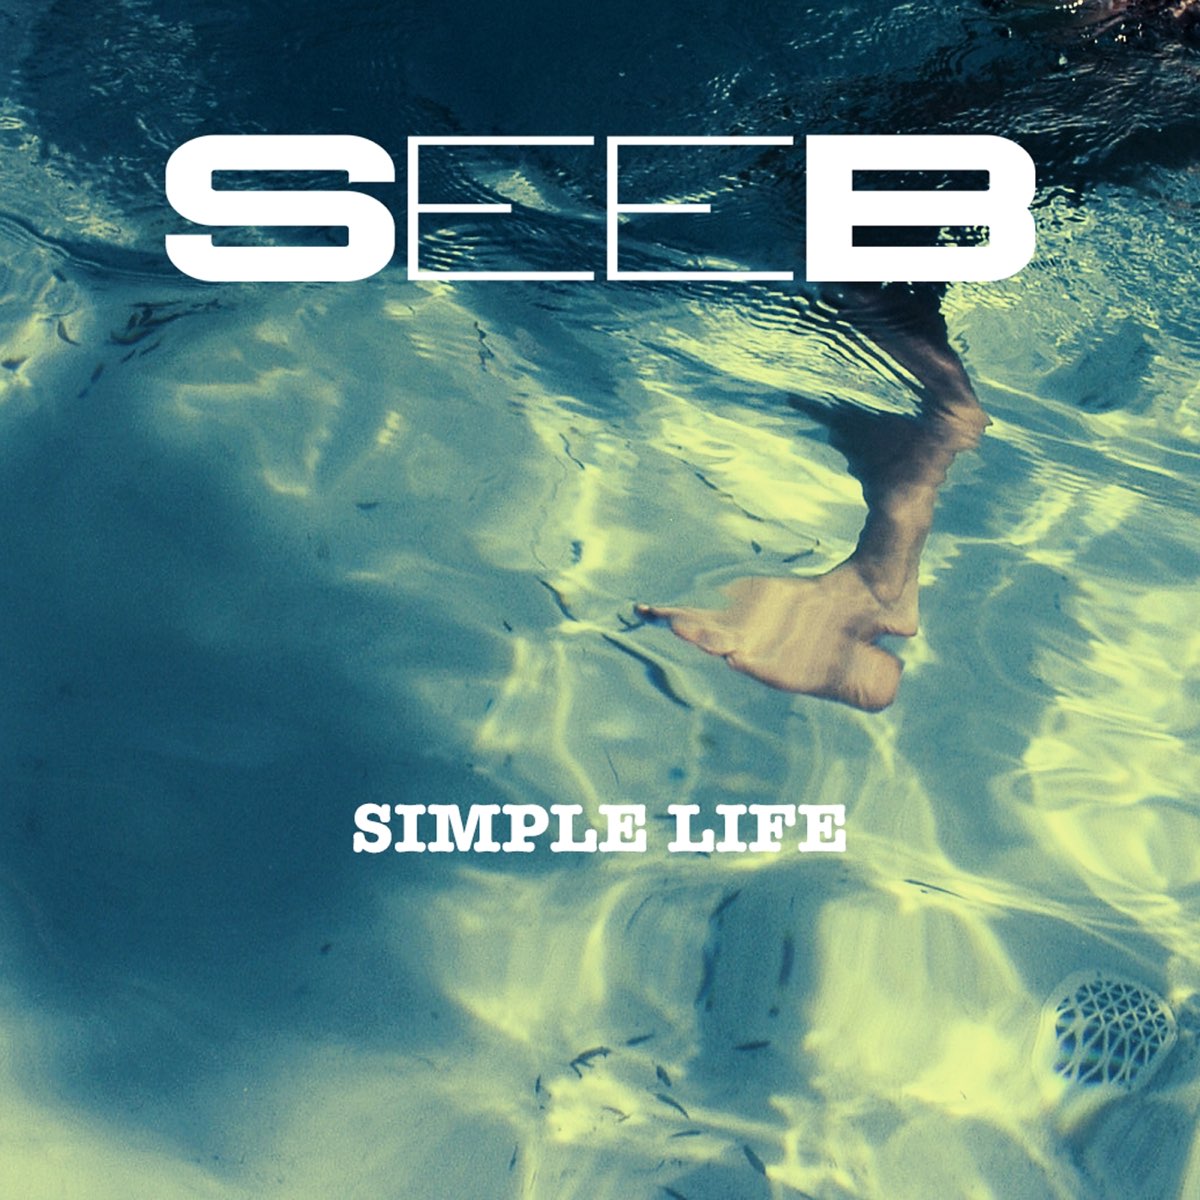 Simply life. Simple обложка. Seeb. Simple Life. Seeb Breathe фото.